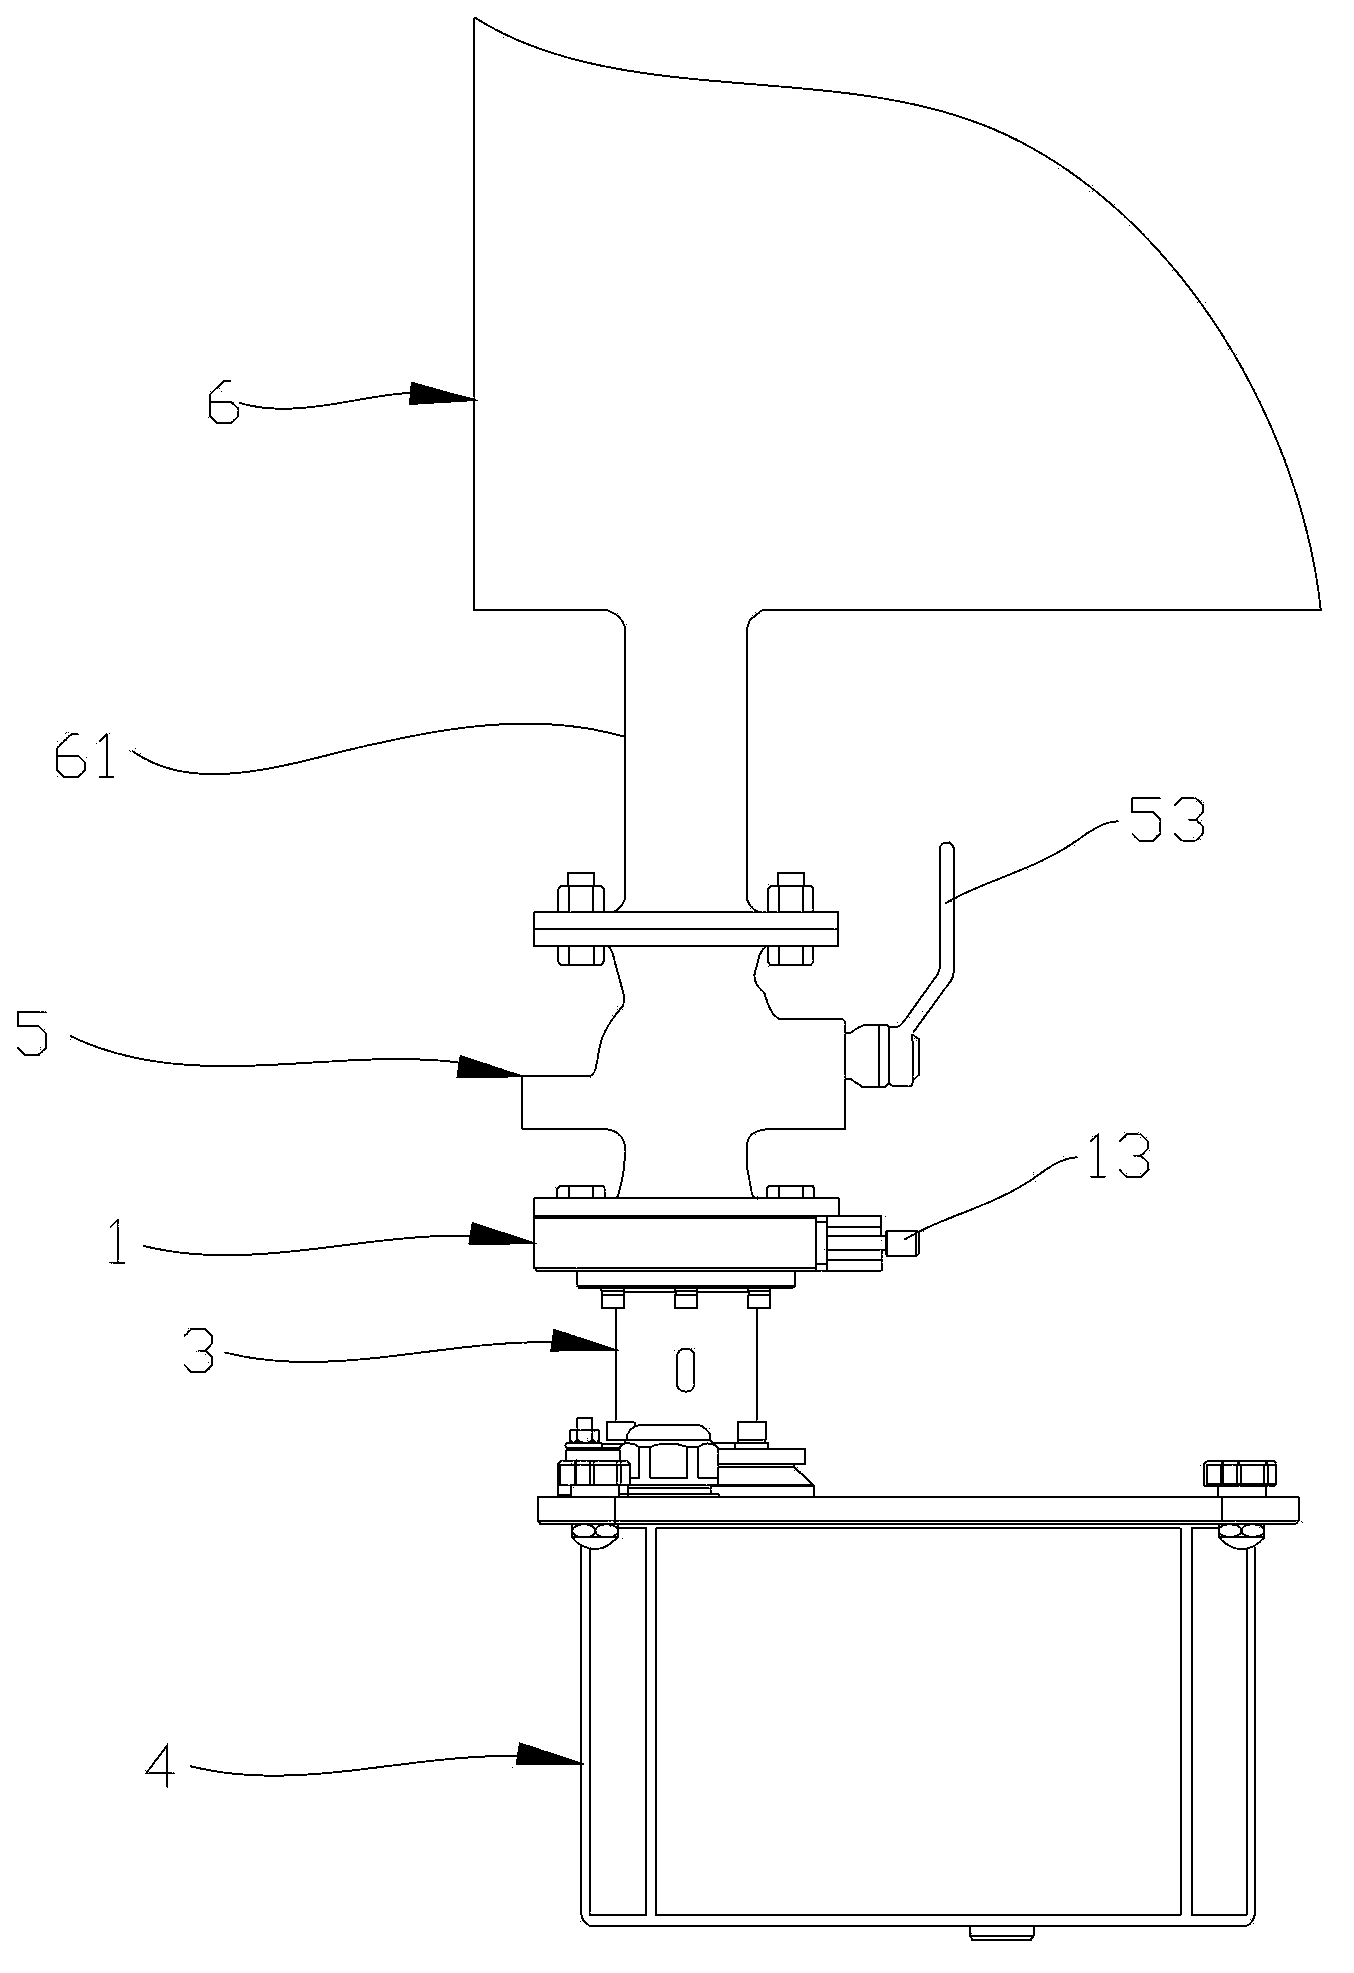 Simple fluid circulation apparatus